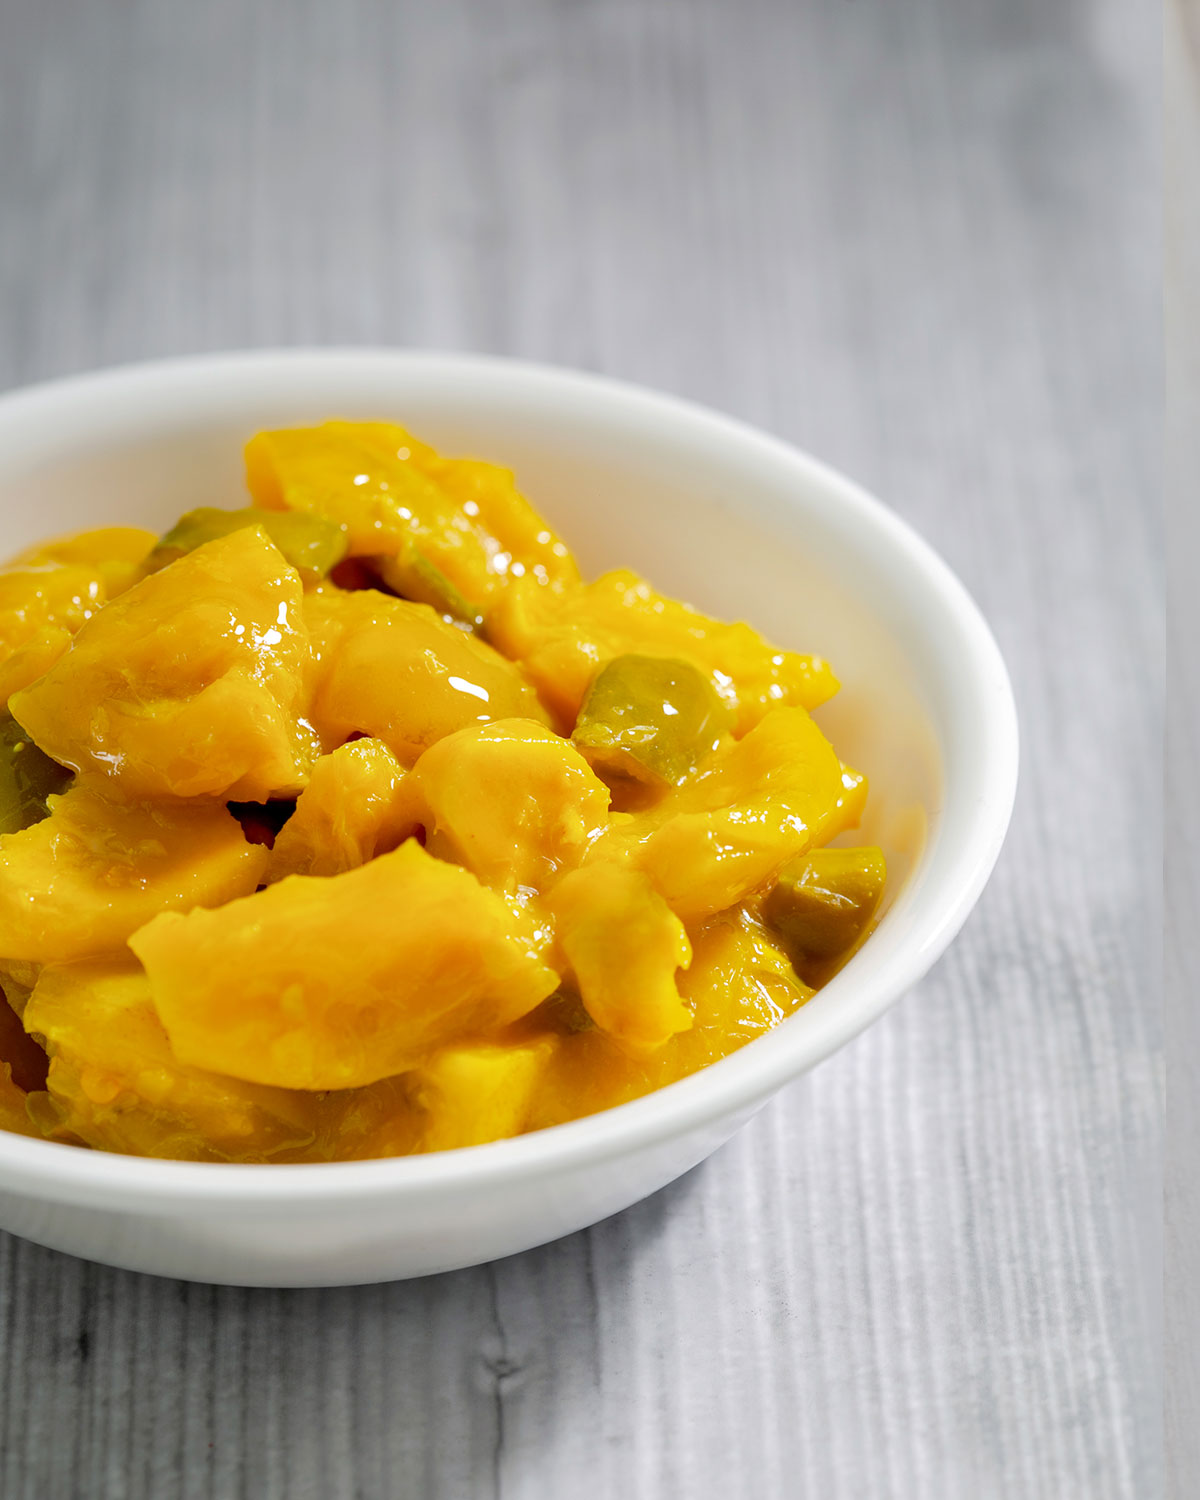 Lemon Ginger Chilli - Upala's Kitchen